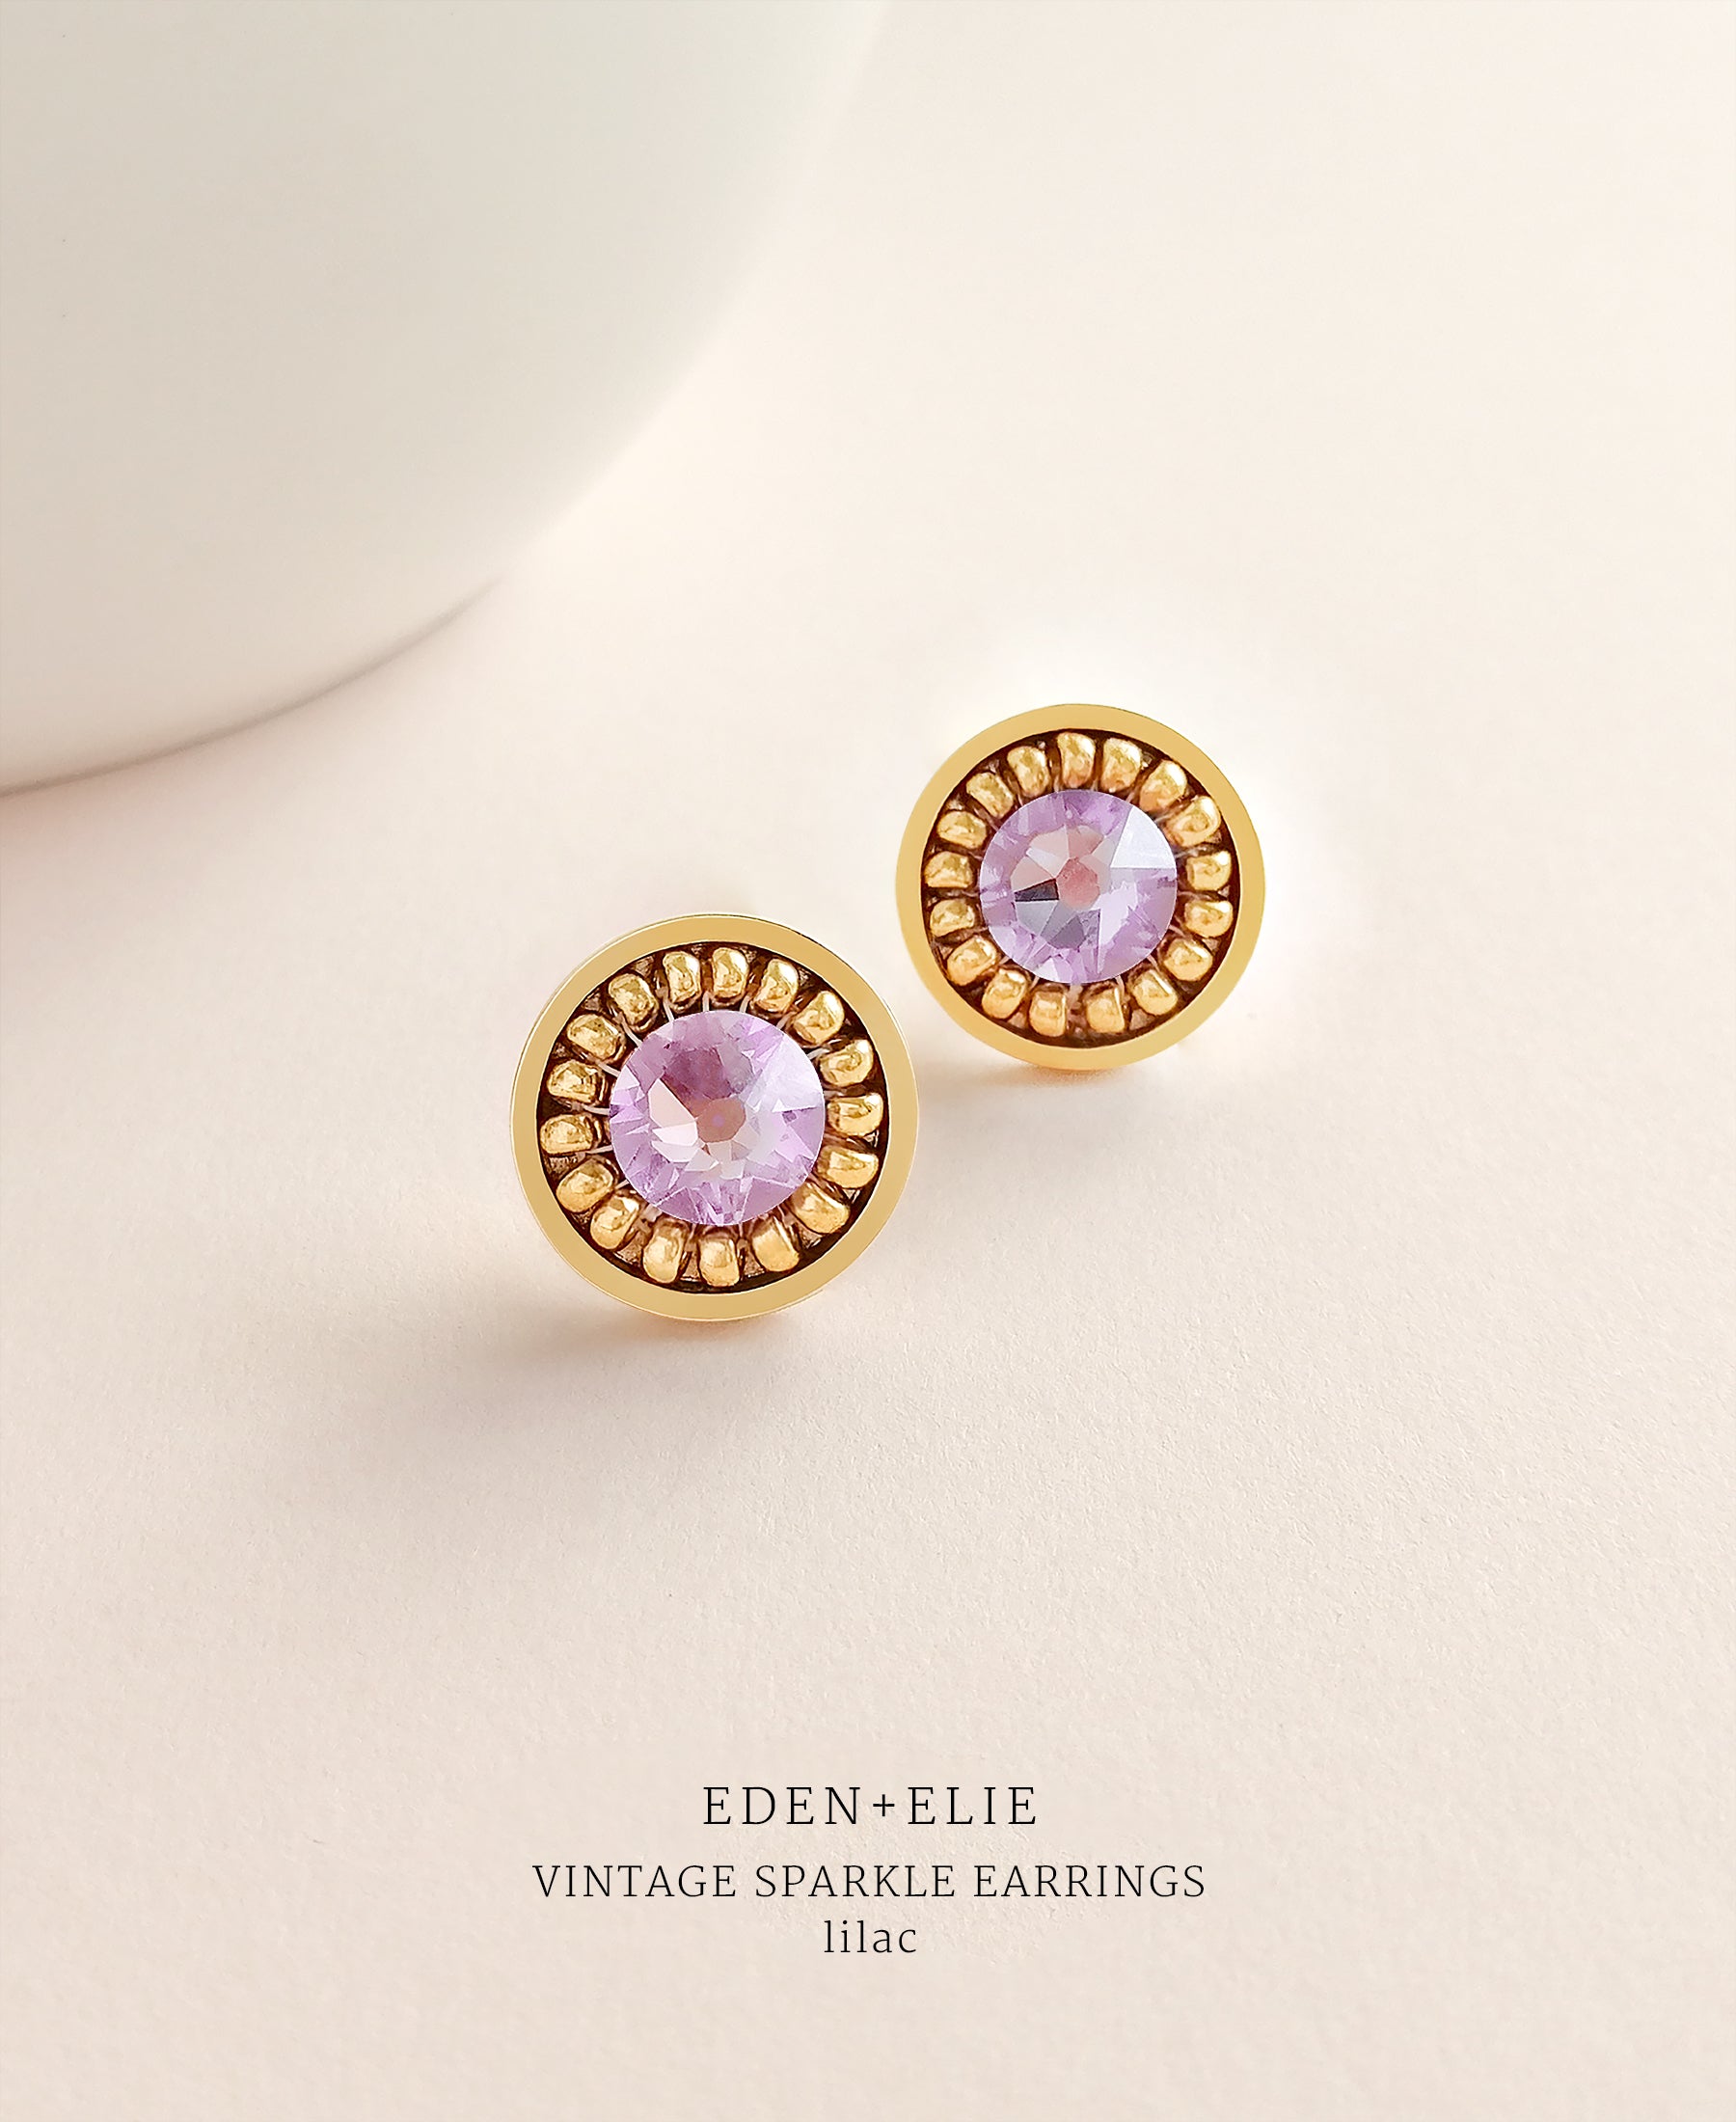 EDEN + ELIE gold plated jewelry Vintage Sparkle stud earrings - lilac purple